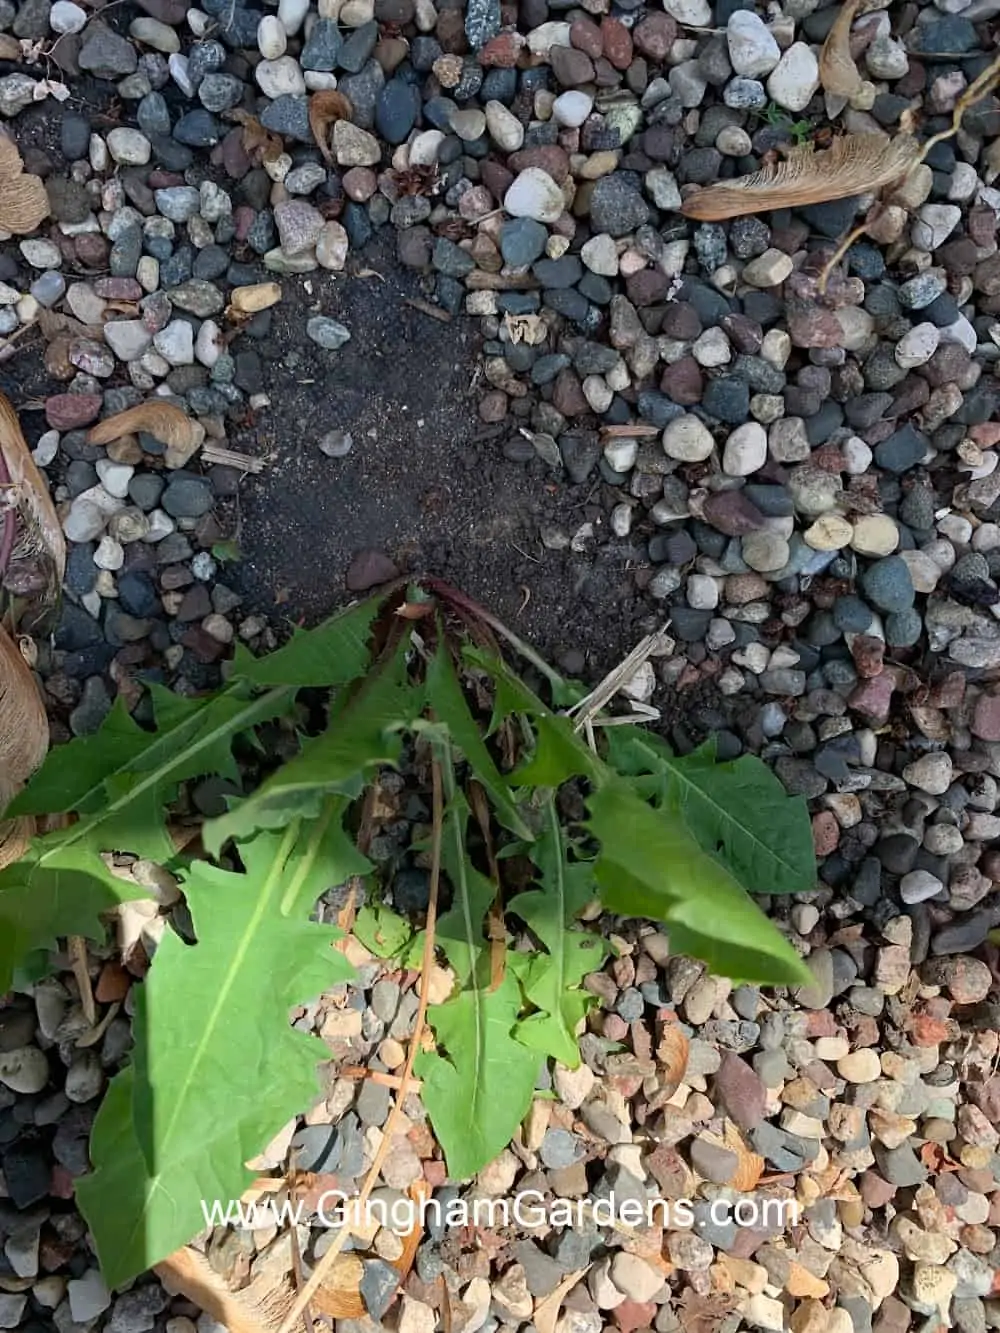 Dandelion in a gravel path growing through landscape fabric